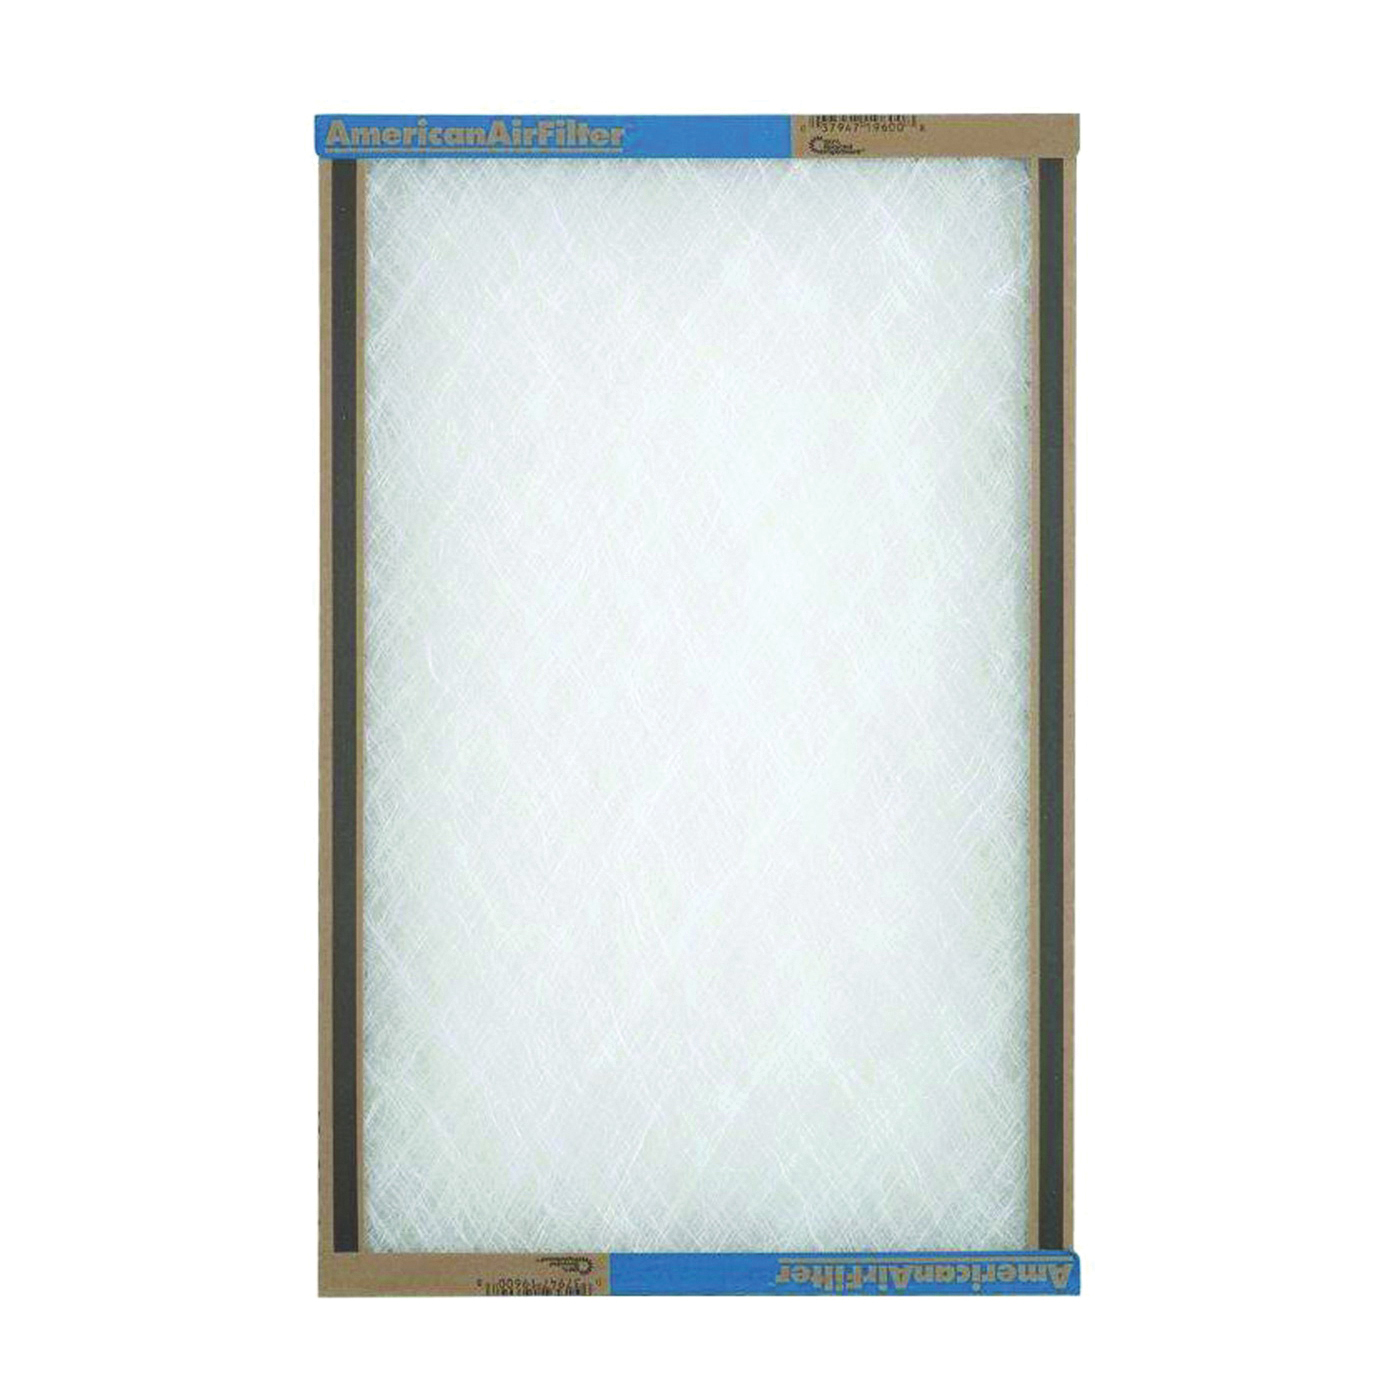 118201 Panel Air Filter, 20 x 18 x 1, Chipboard Frame